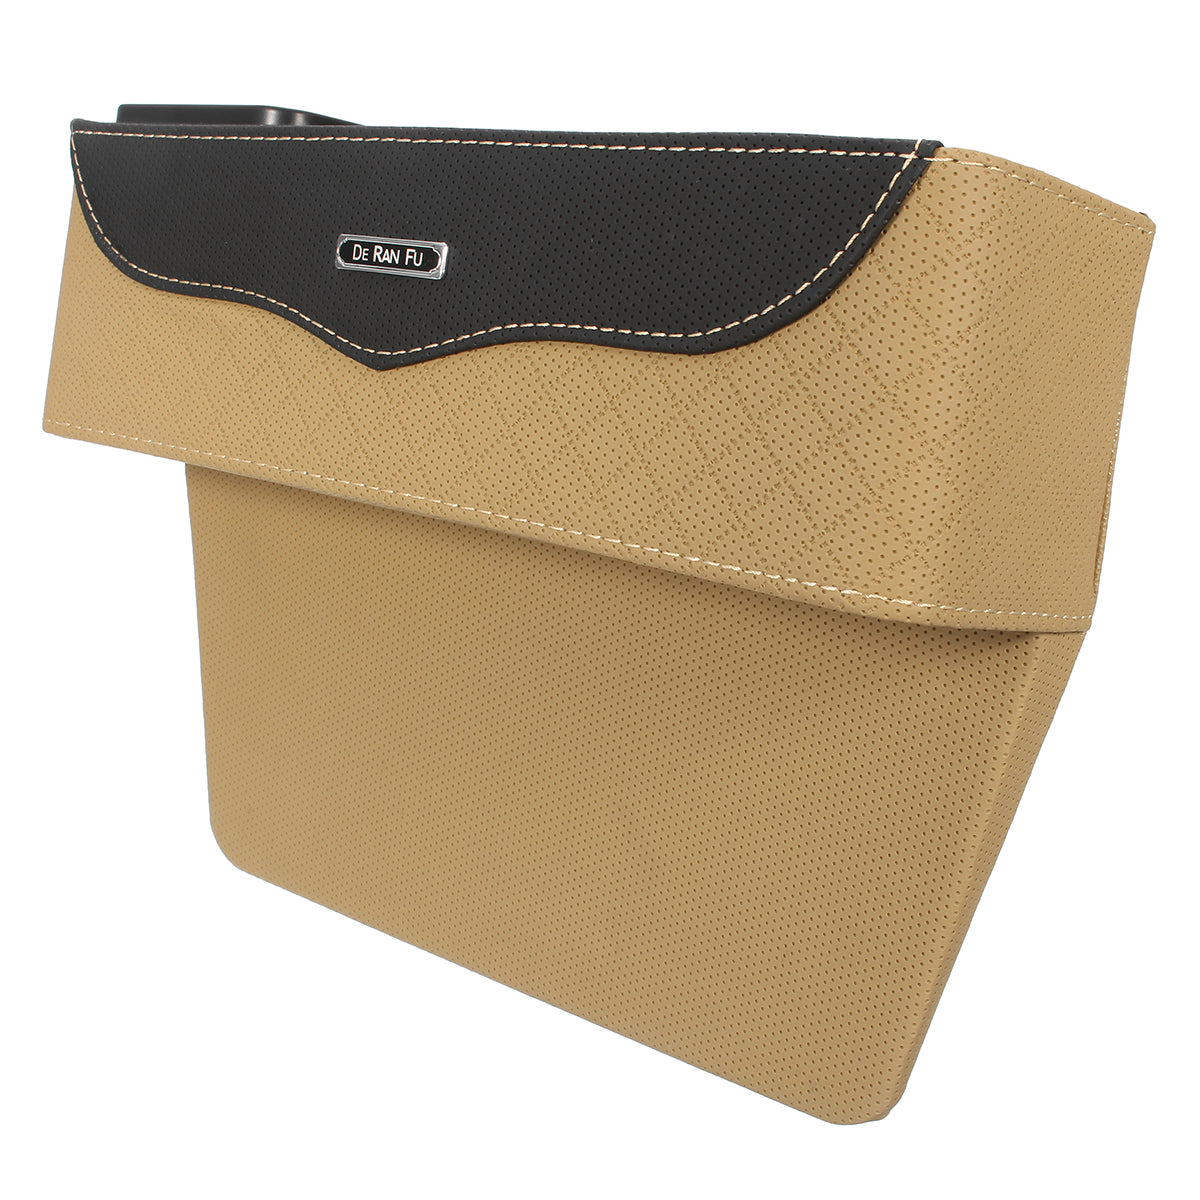 Leather Car Seat Crevice Storage Bag Box Money Pot Auto Seat Gap Filler Organizer - Auto GoShop